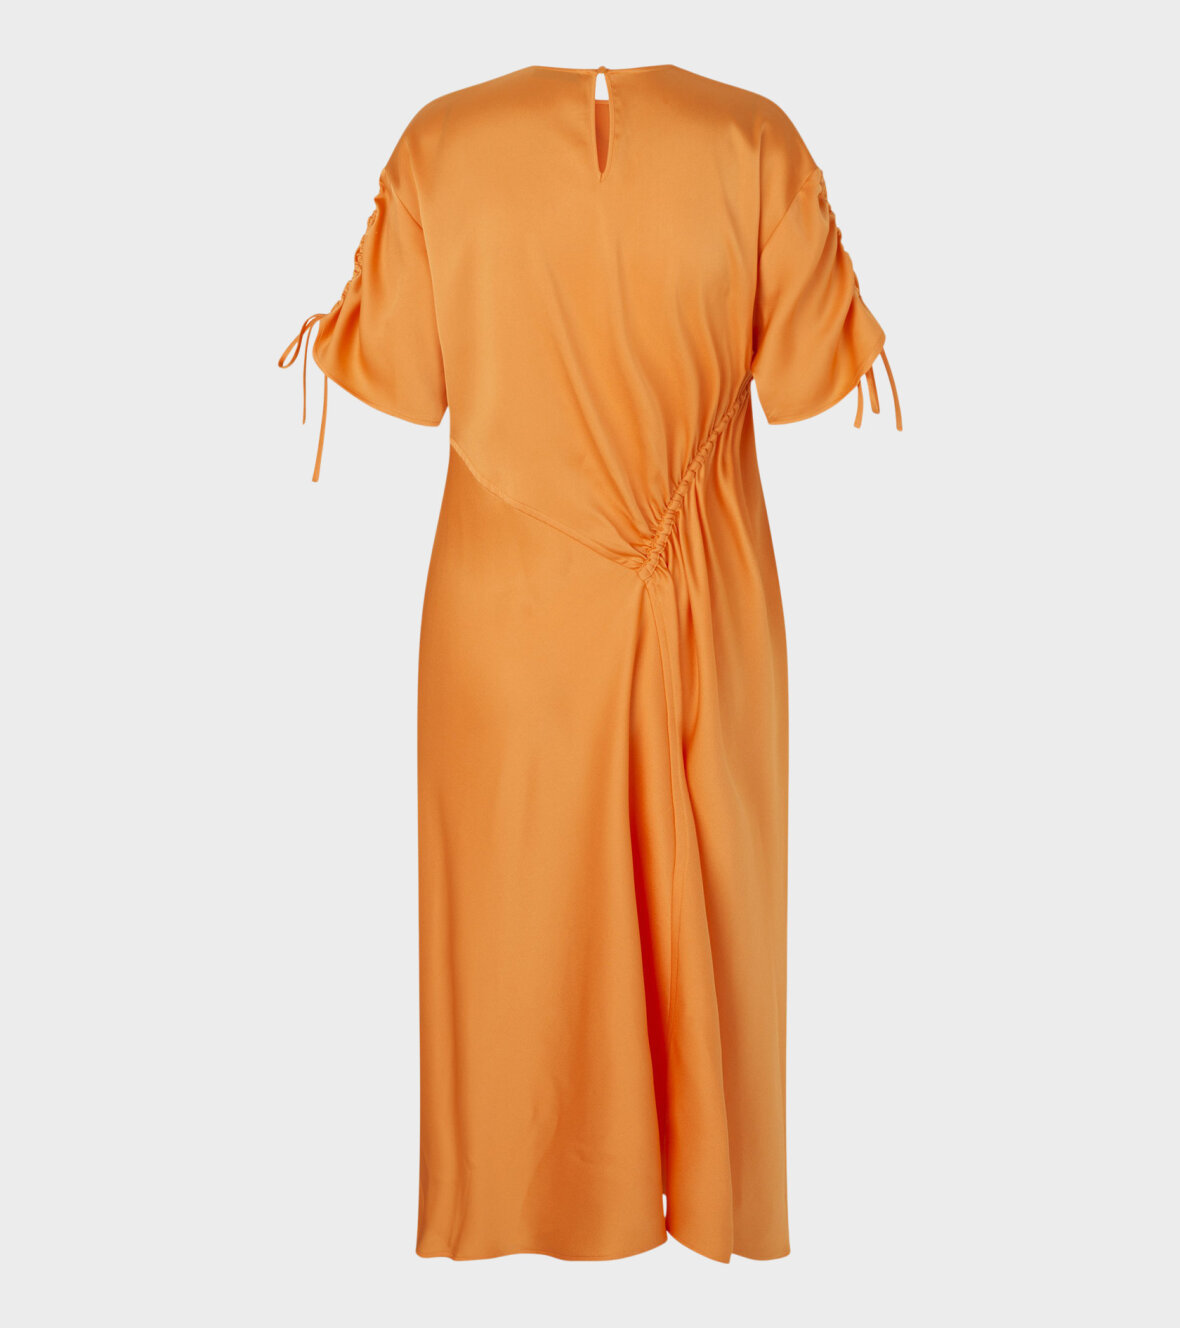 Hæl Disco Station dr. Adams - Stine Goya Davina Dress Orange